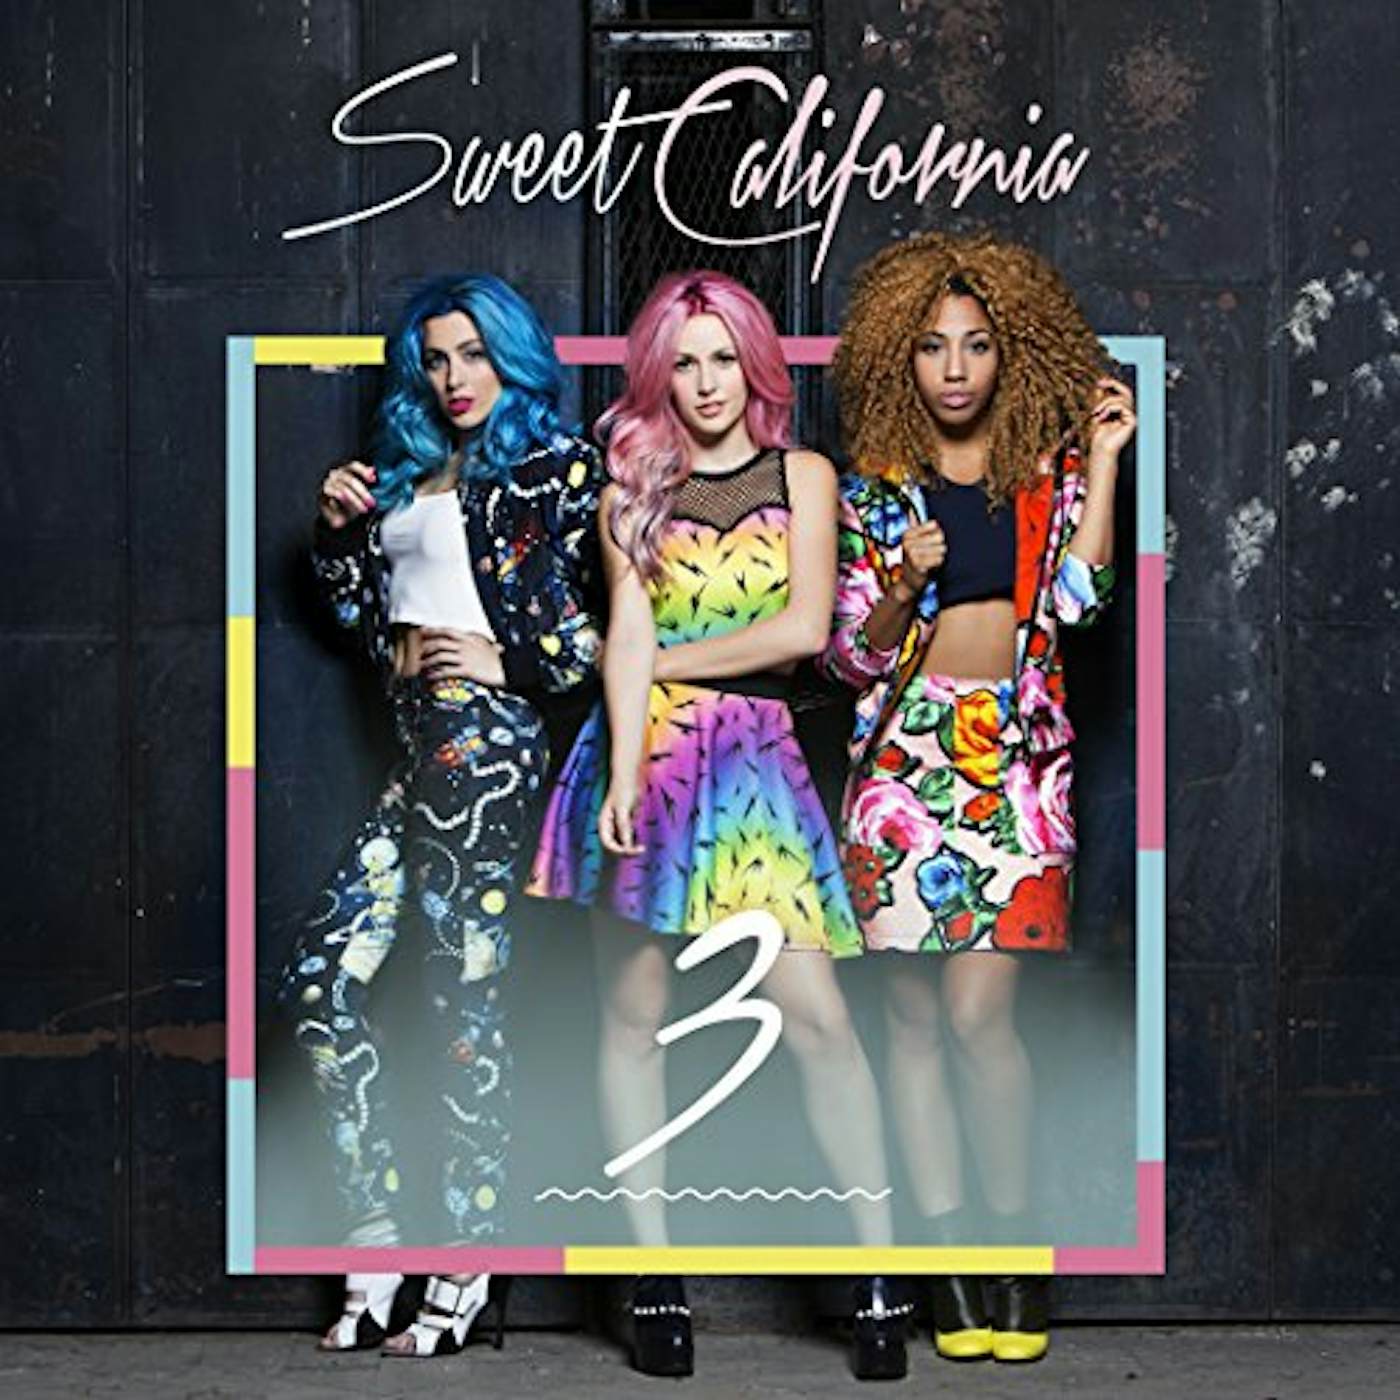 Sweet California 3 CD